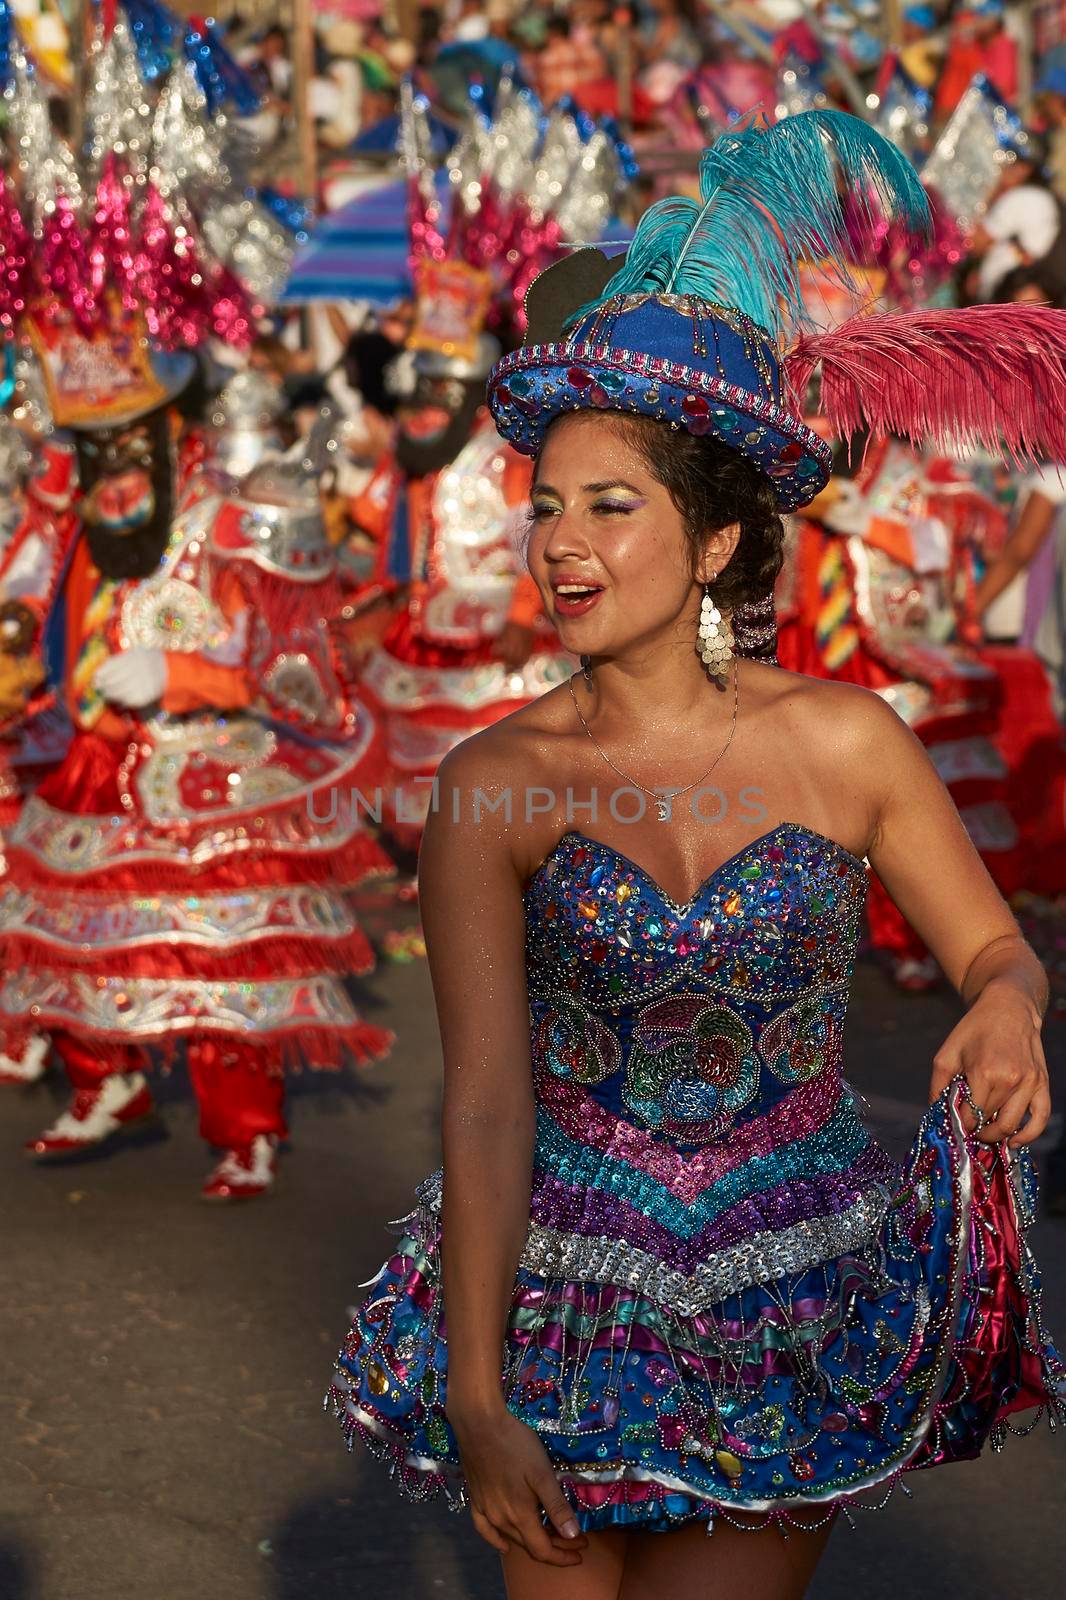 Morenada dancers at the Arica Carnival by JeremyRichards